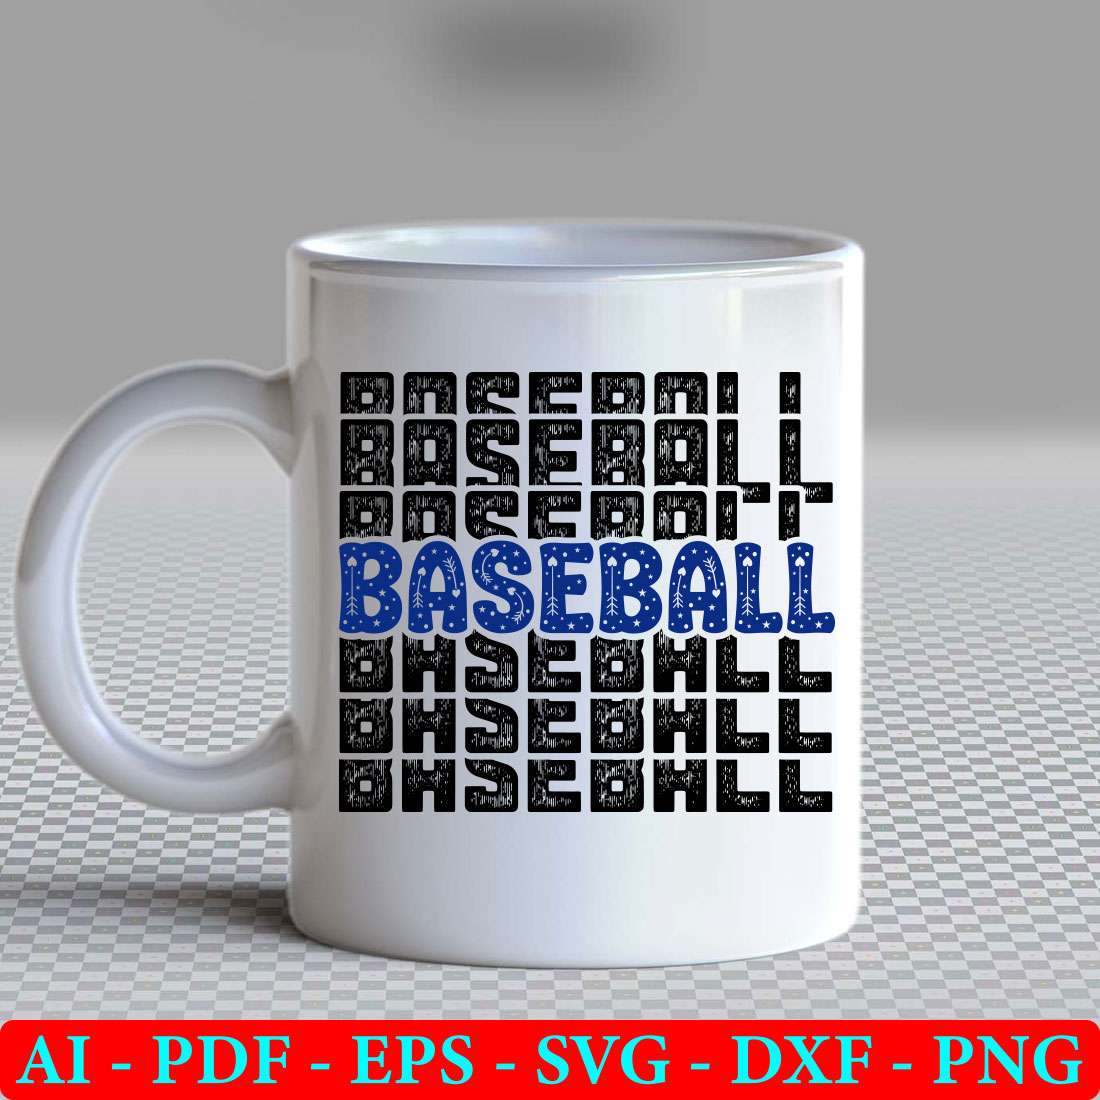 White coffee mug with the words baseball on it.